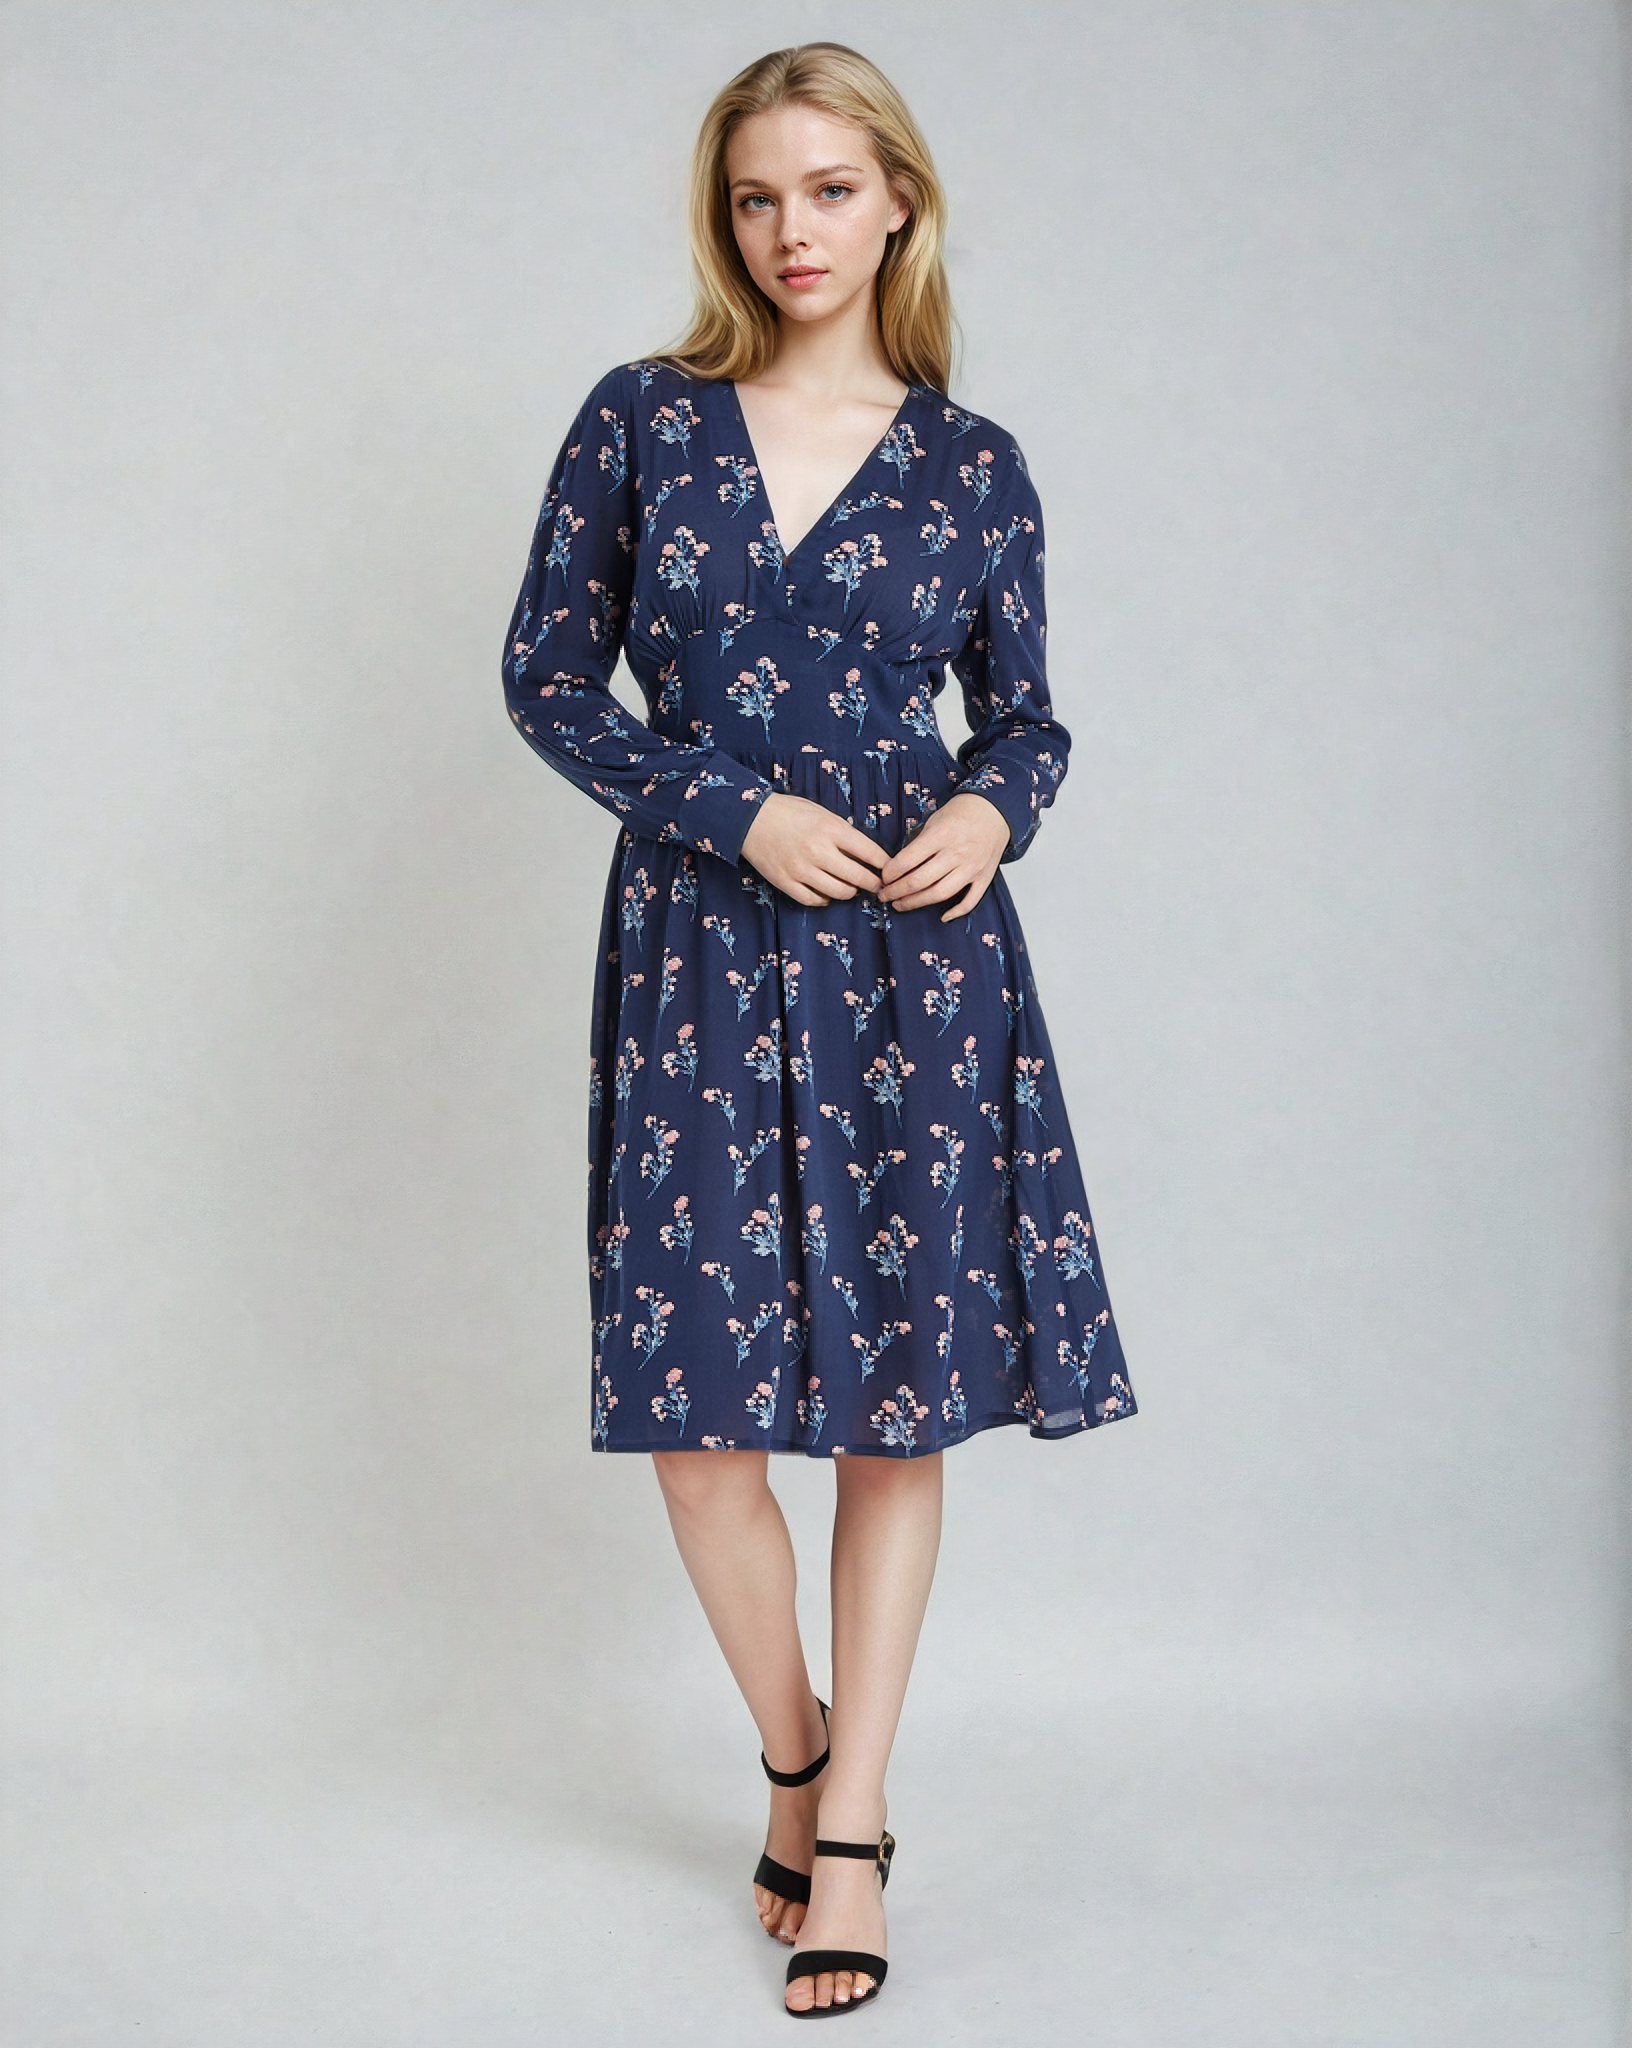 Kate Slim-Fit Floral Dress